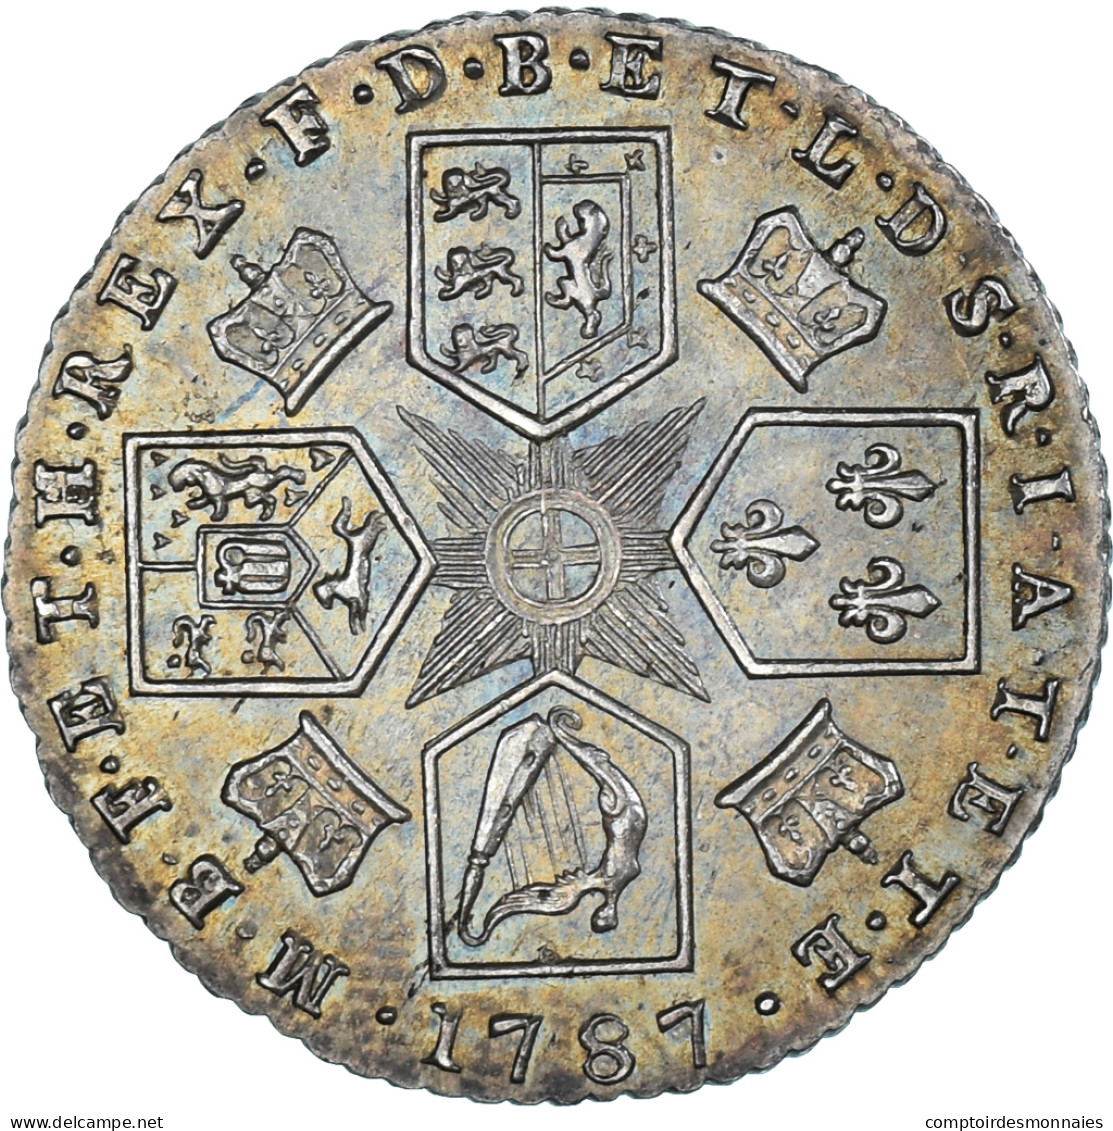 Monnaie, Grande-Bretagne, George III, 6 Pence, 1787, SUP, Argent, Spink:3749 - G. 6 Pence